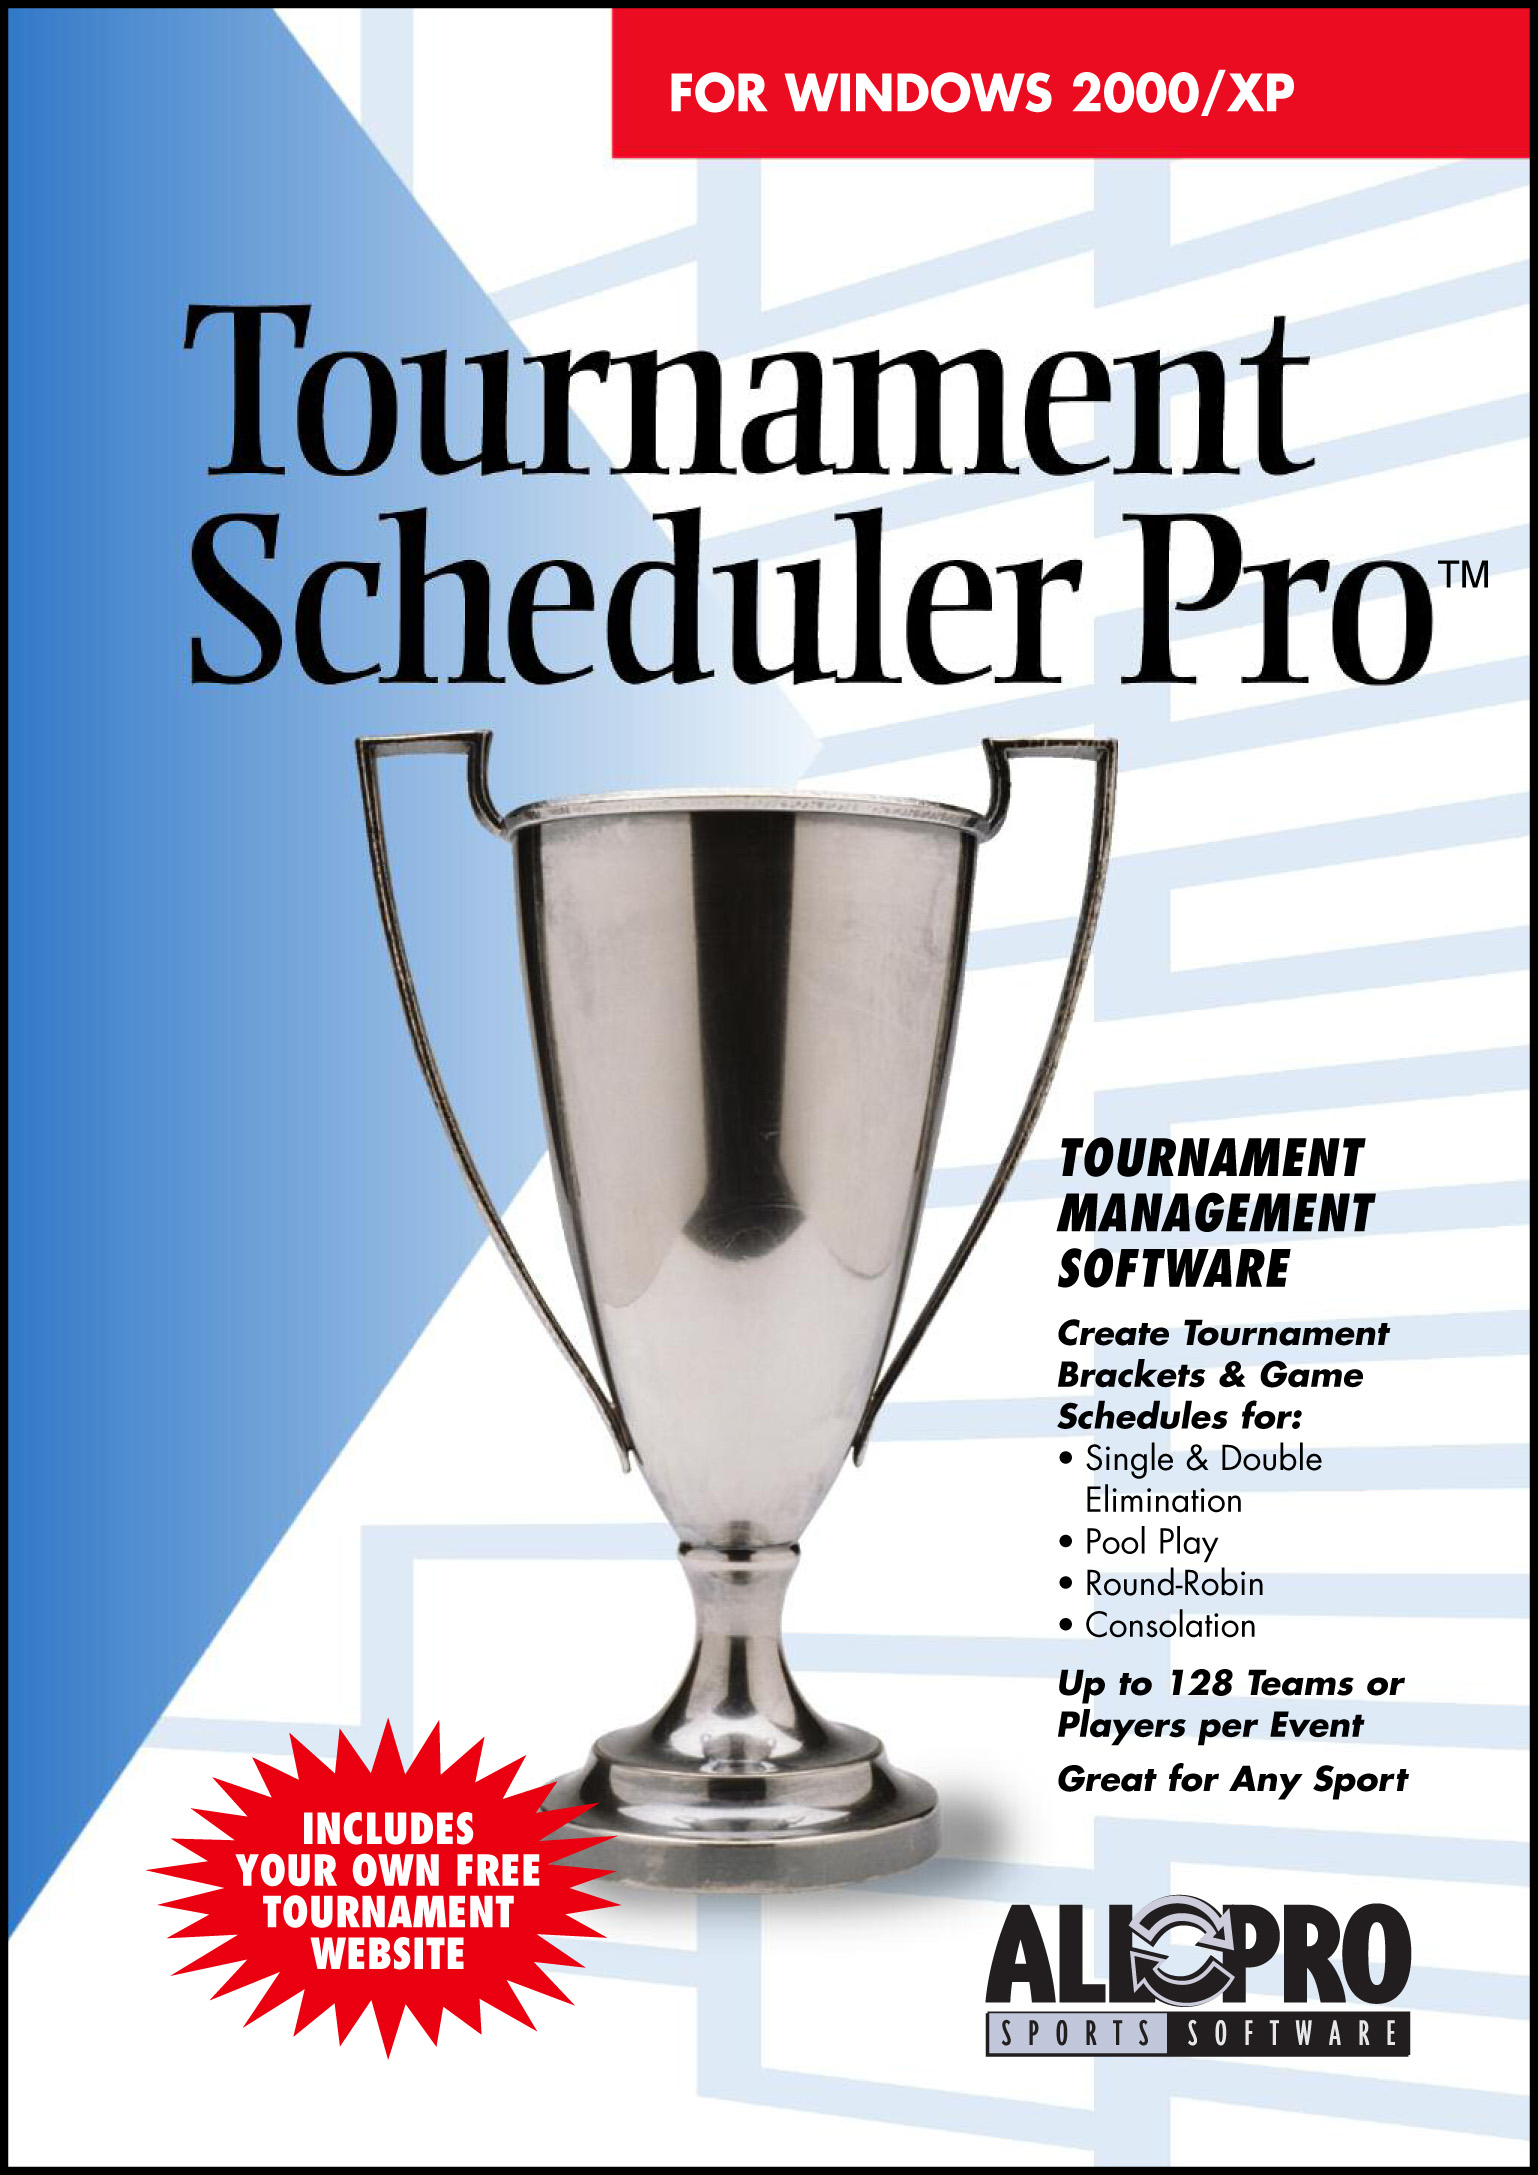 Free tournament software downloads